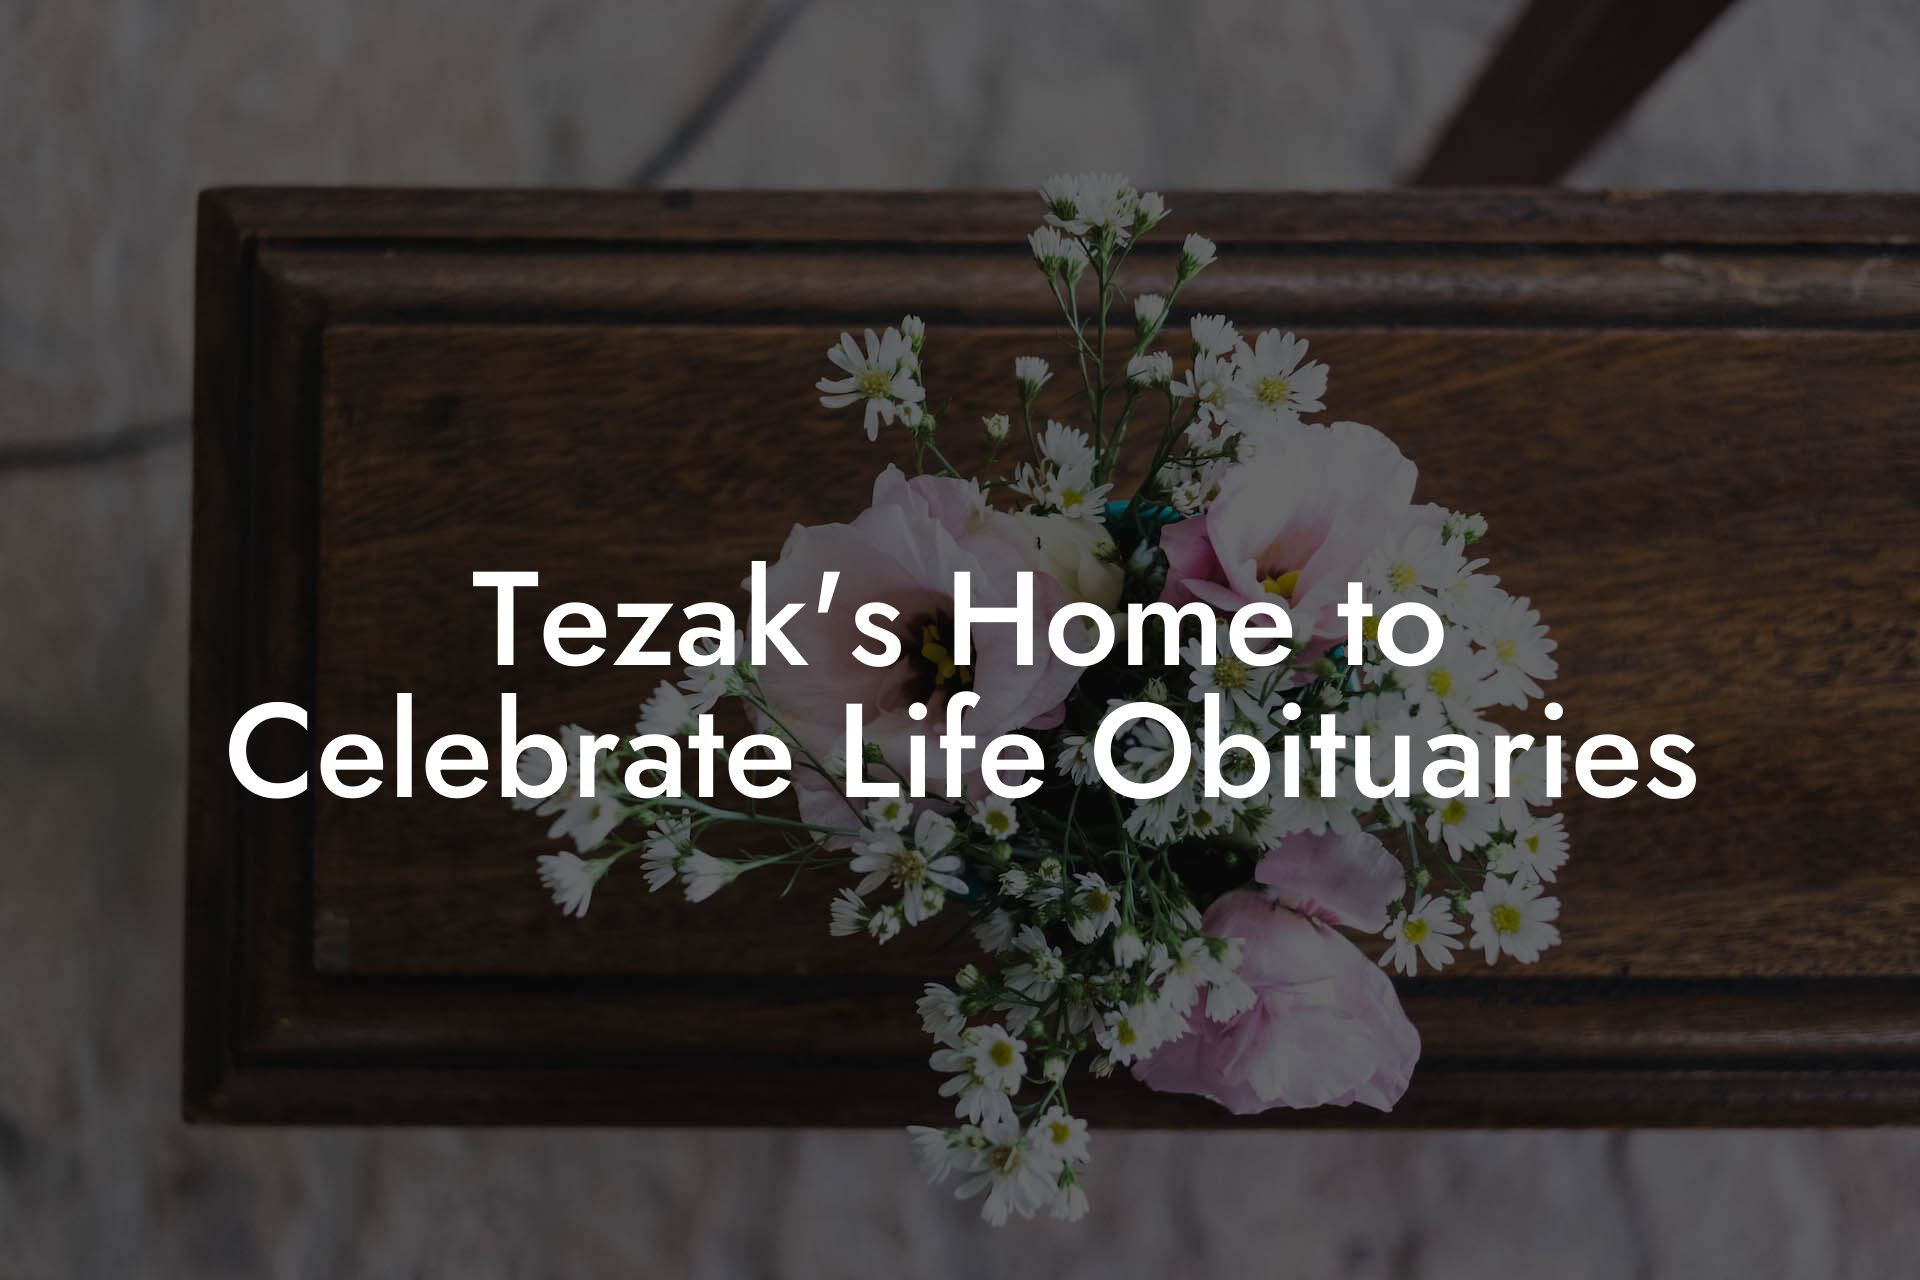 Tezak's Home to Celebrate Life Obituaries